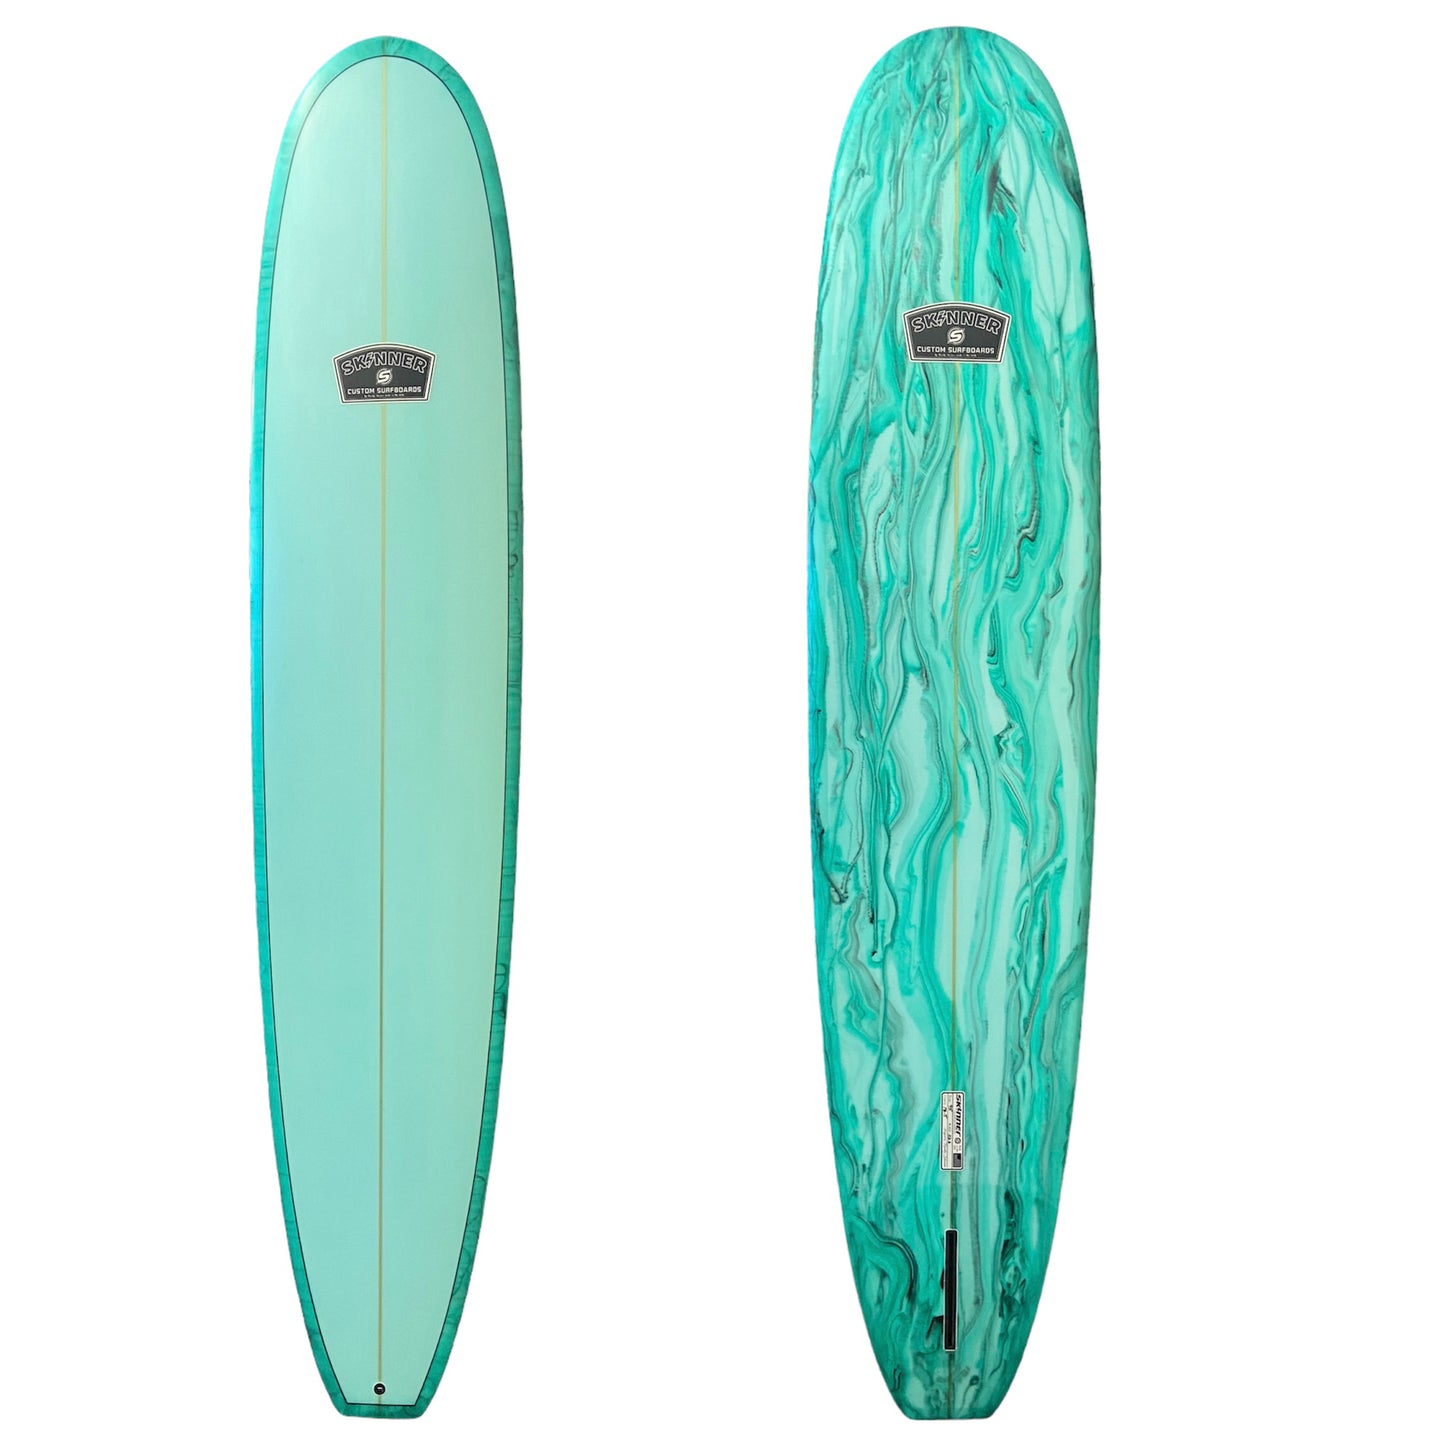 Skinner Surfboards 9'5 x 23.3 x 3.15" Poly Performance Log Noserider Longboard 78.6 Liters Surfboard